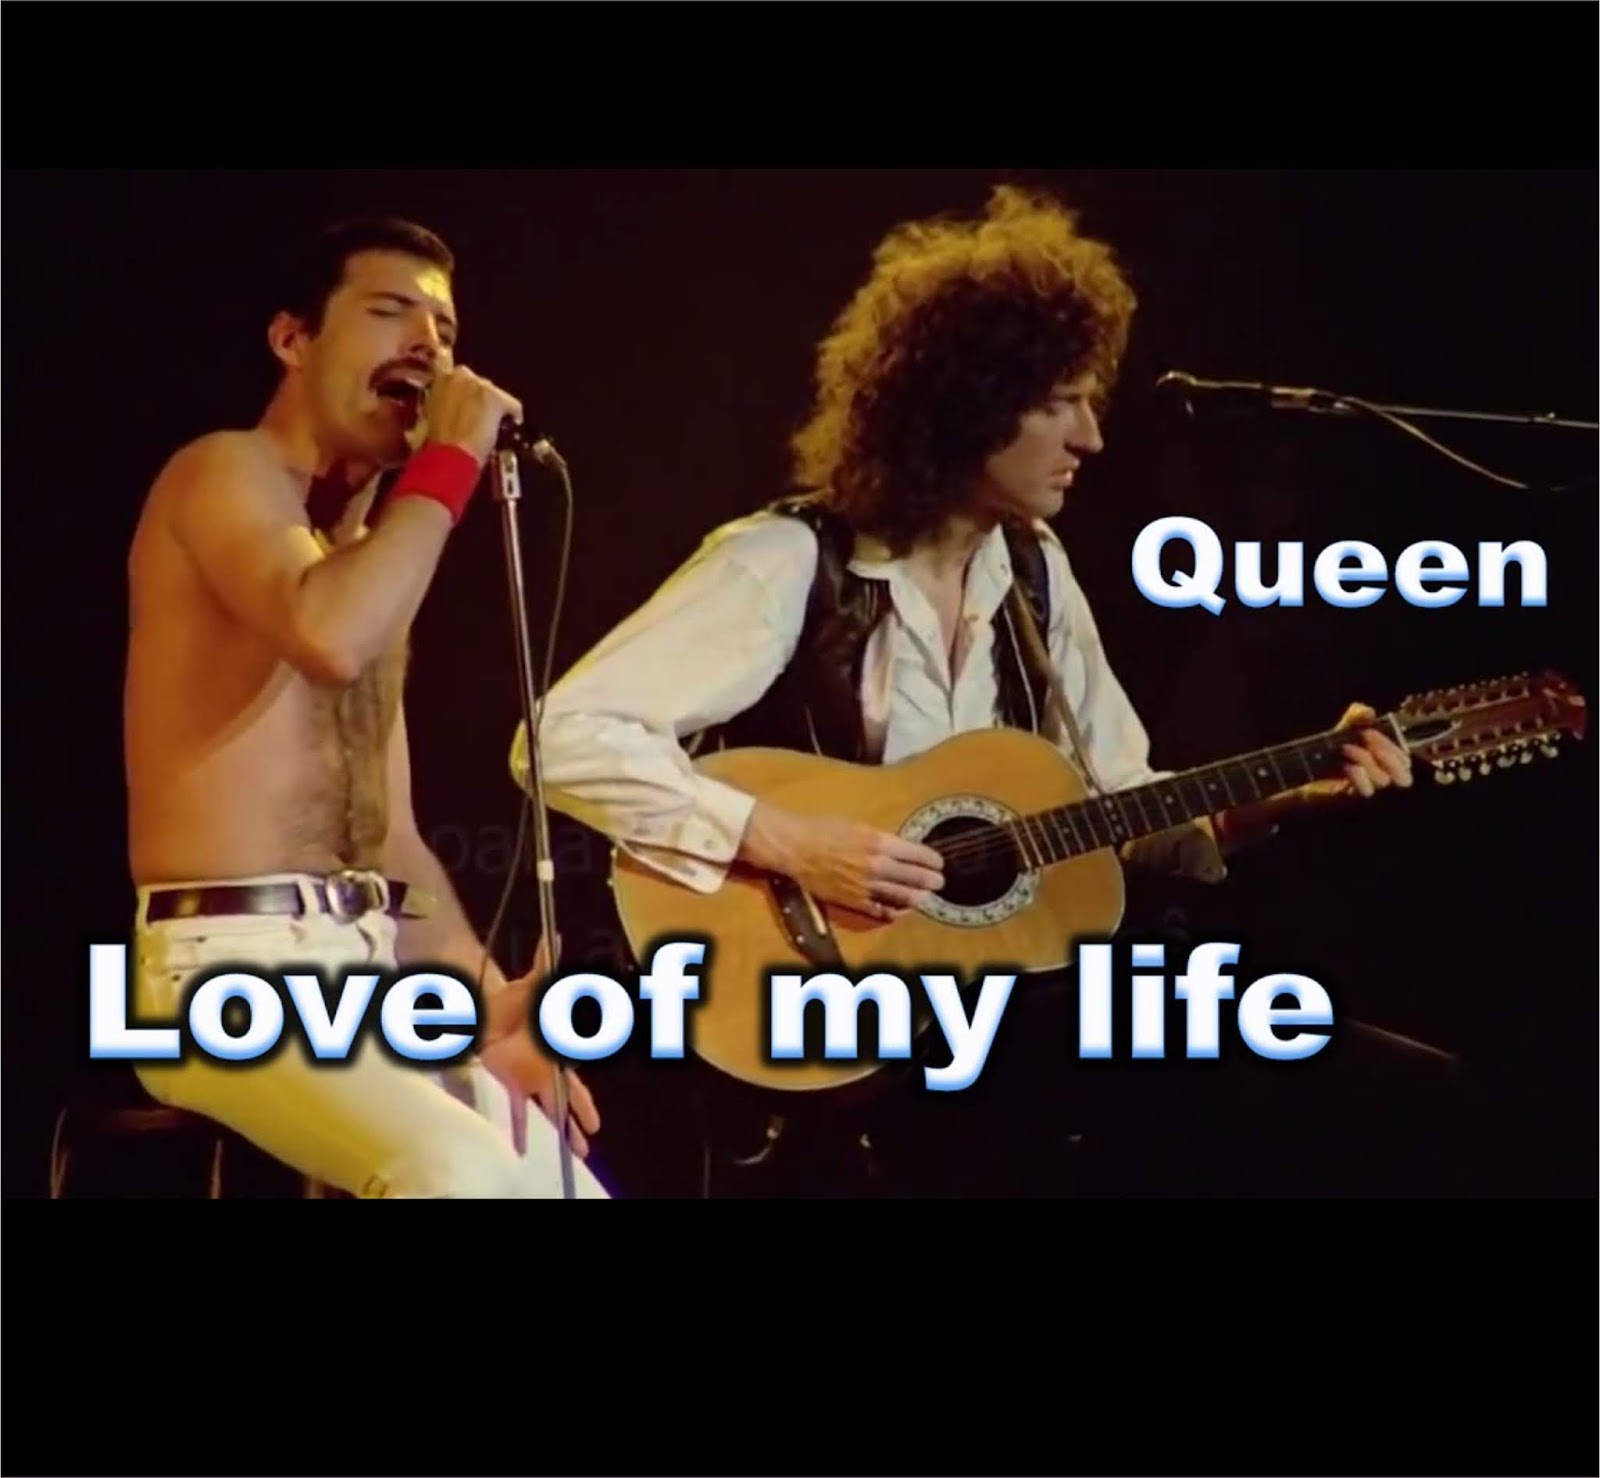 Песня оф май лайф. Лав оф май лайф. Love Queen. The Love of my Life. Love of my Life обложка.